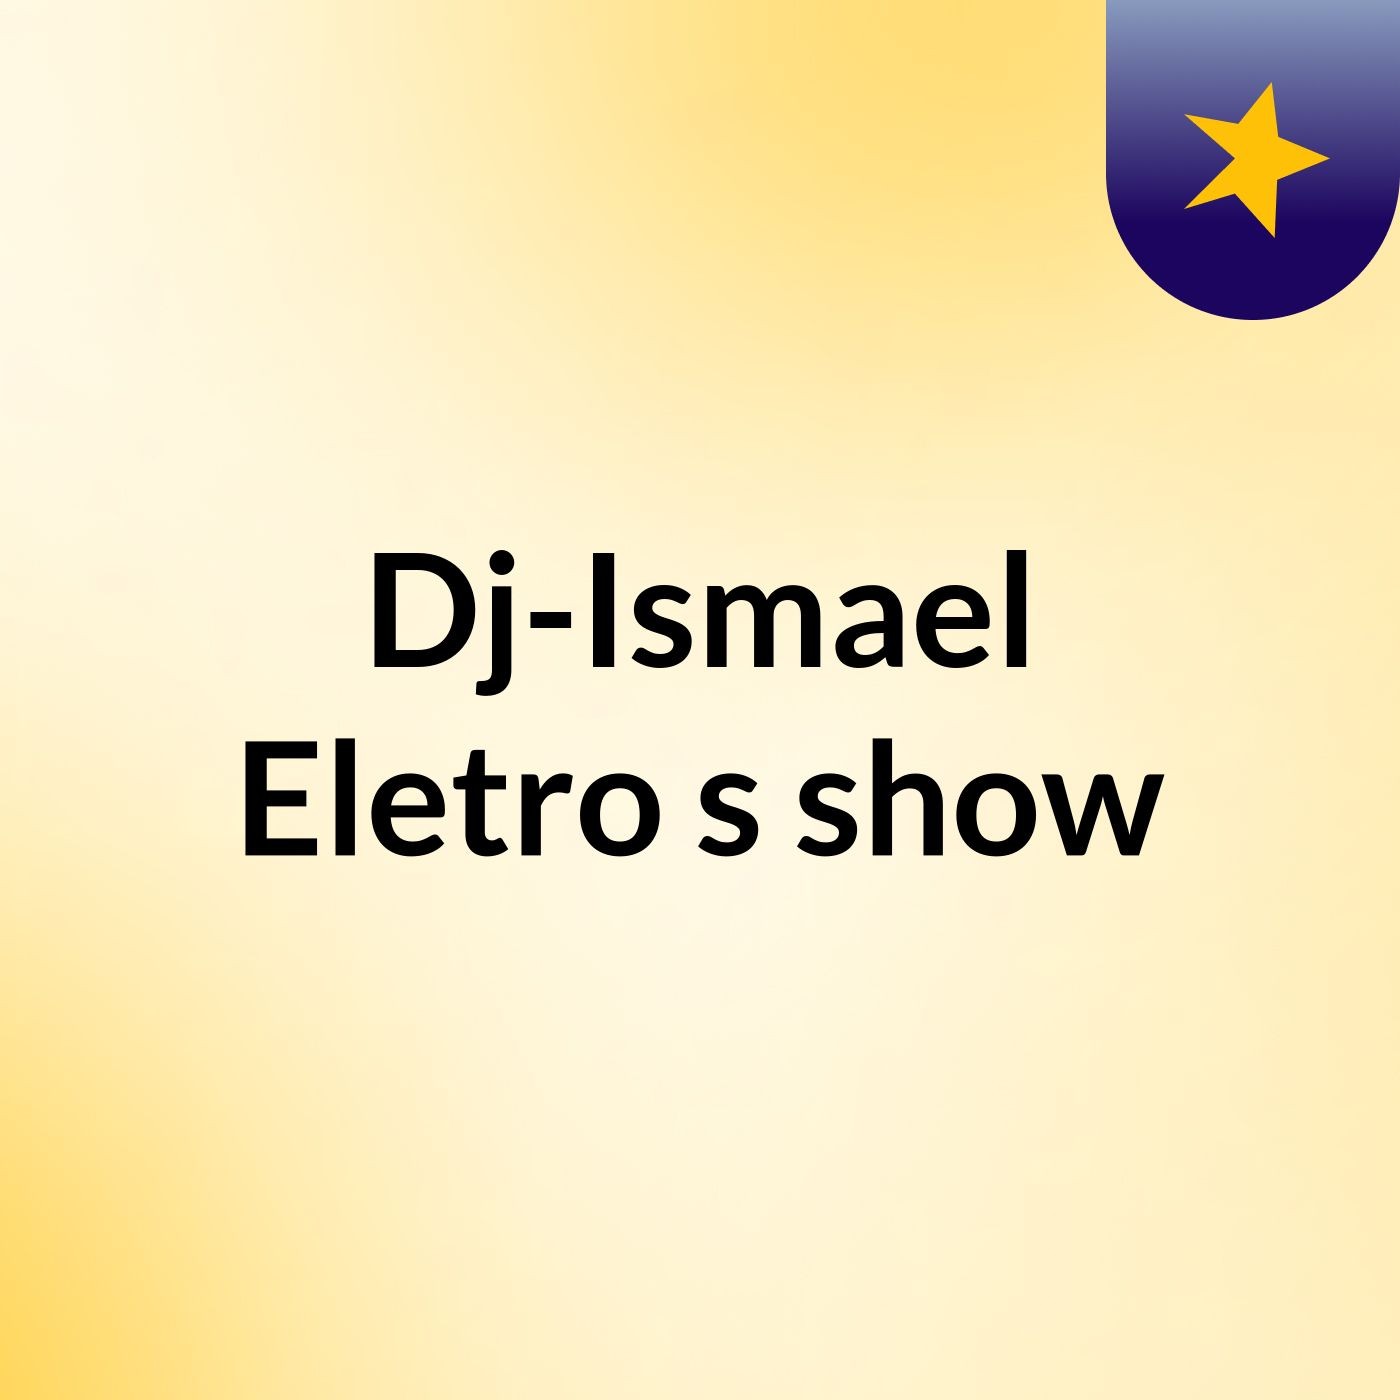 Dj-Ismael Eletro's show